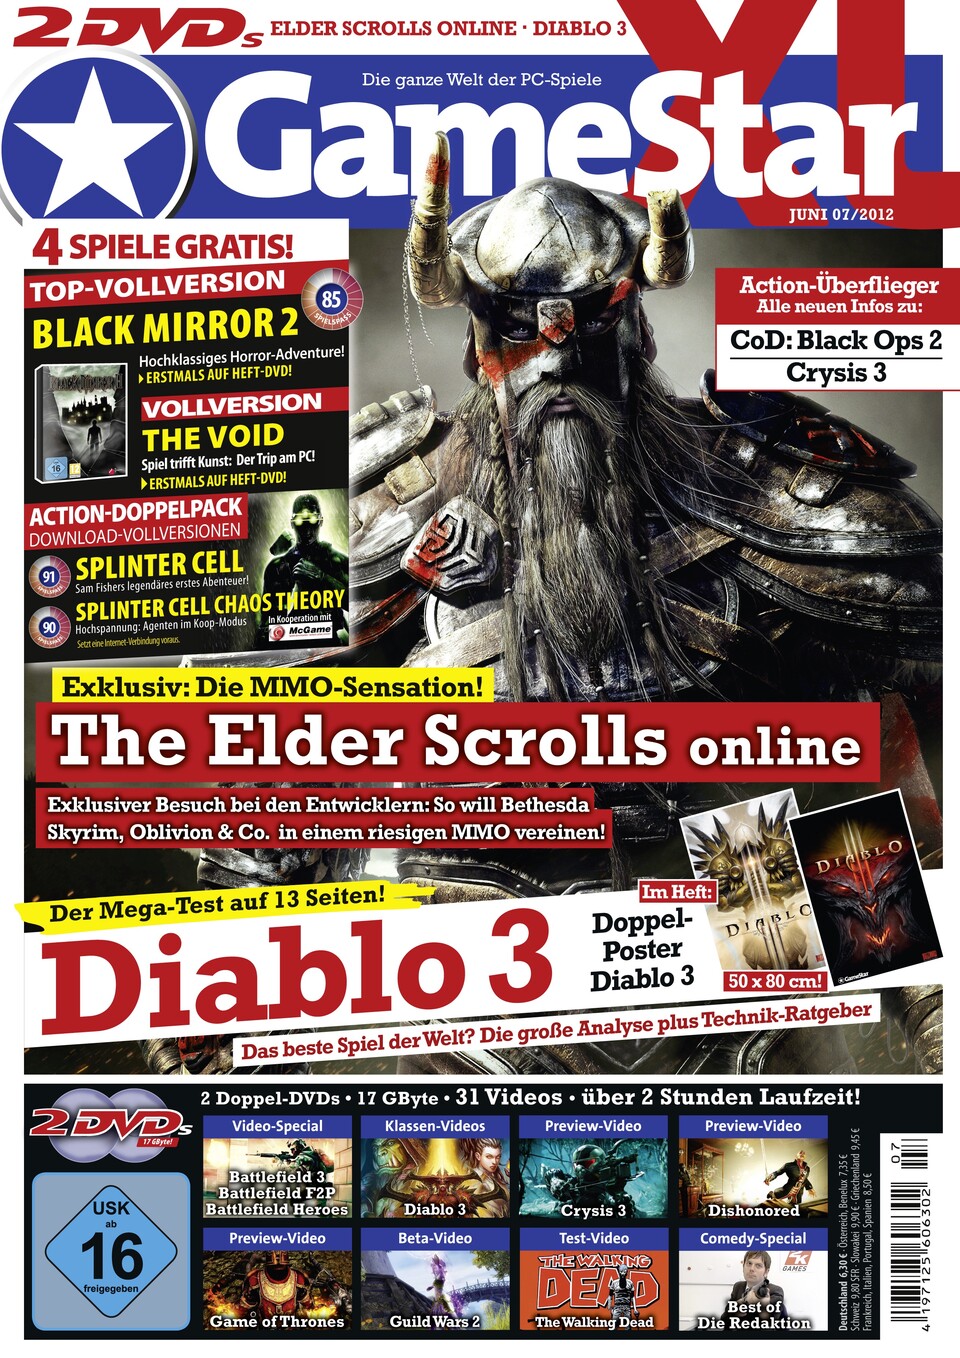 Cover der GameStar XL (07/12) - ab 30. Mai am Kiosk erhältlich.